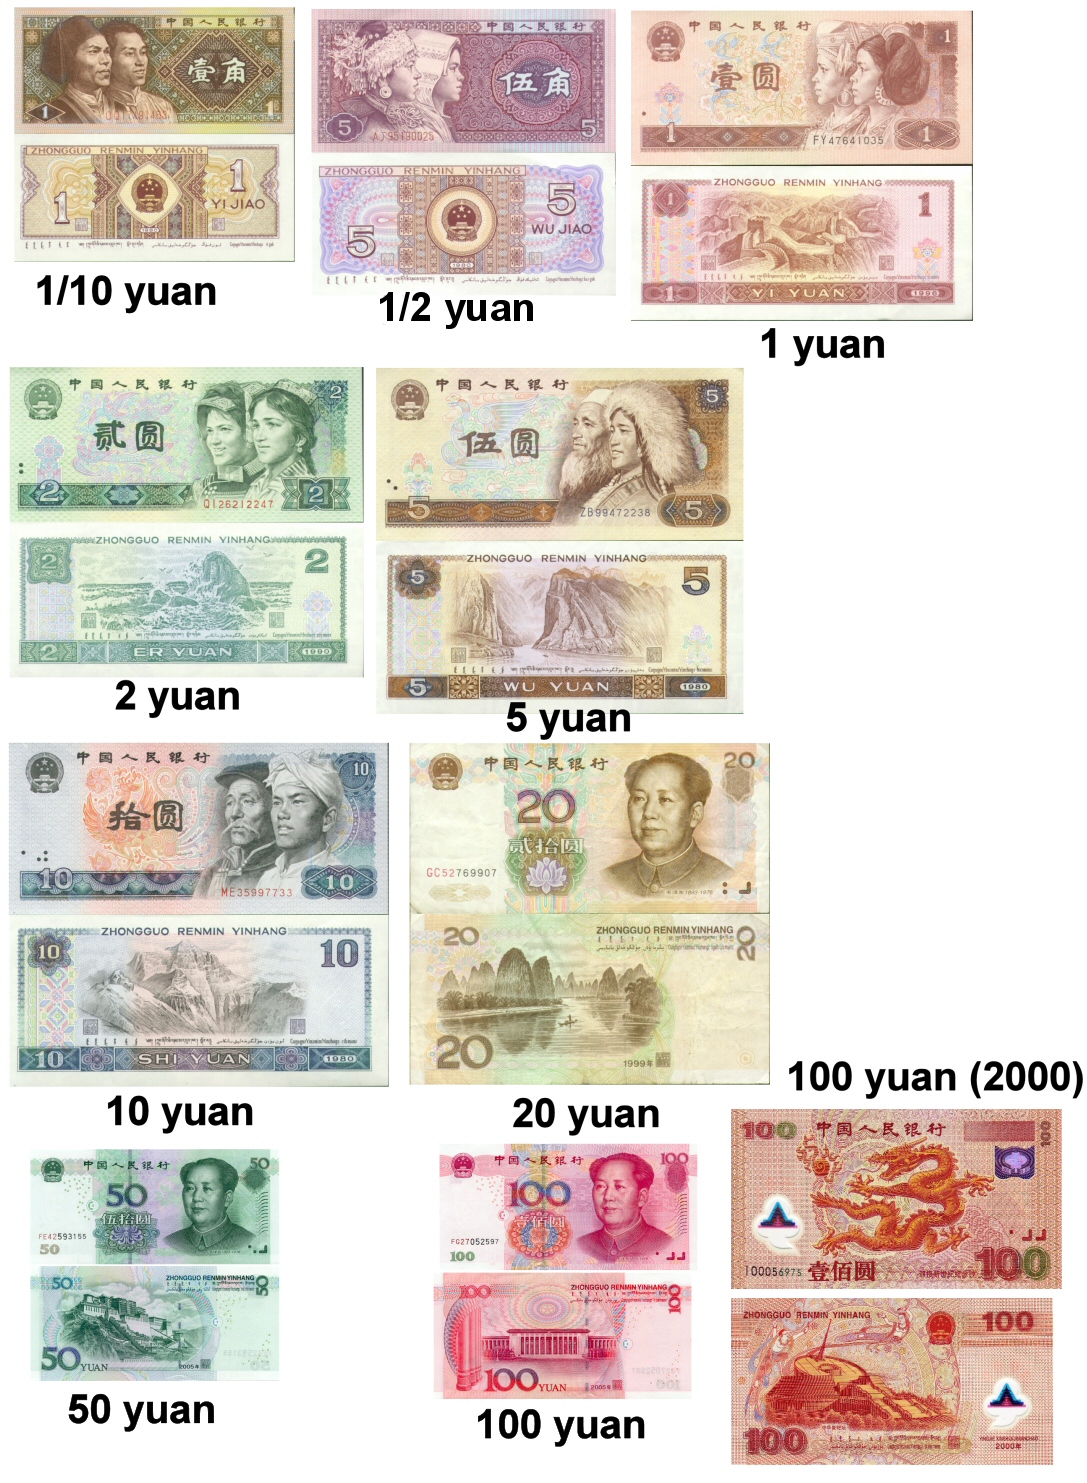 Chinesischer RenminbiChinese renminbi yuan